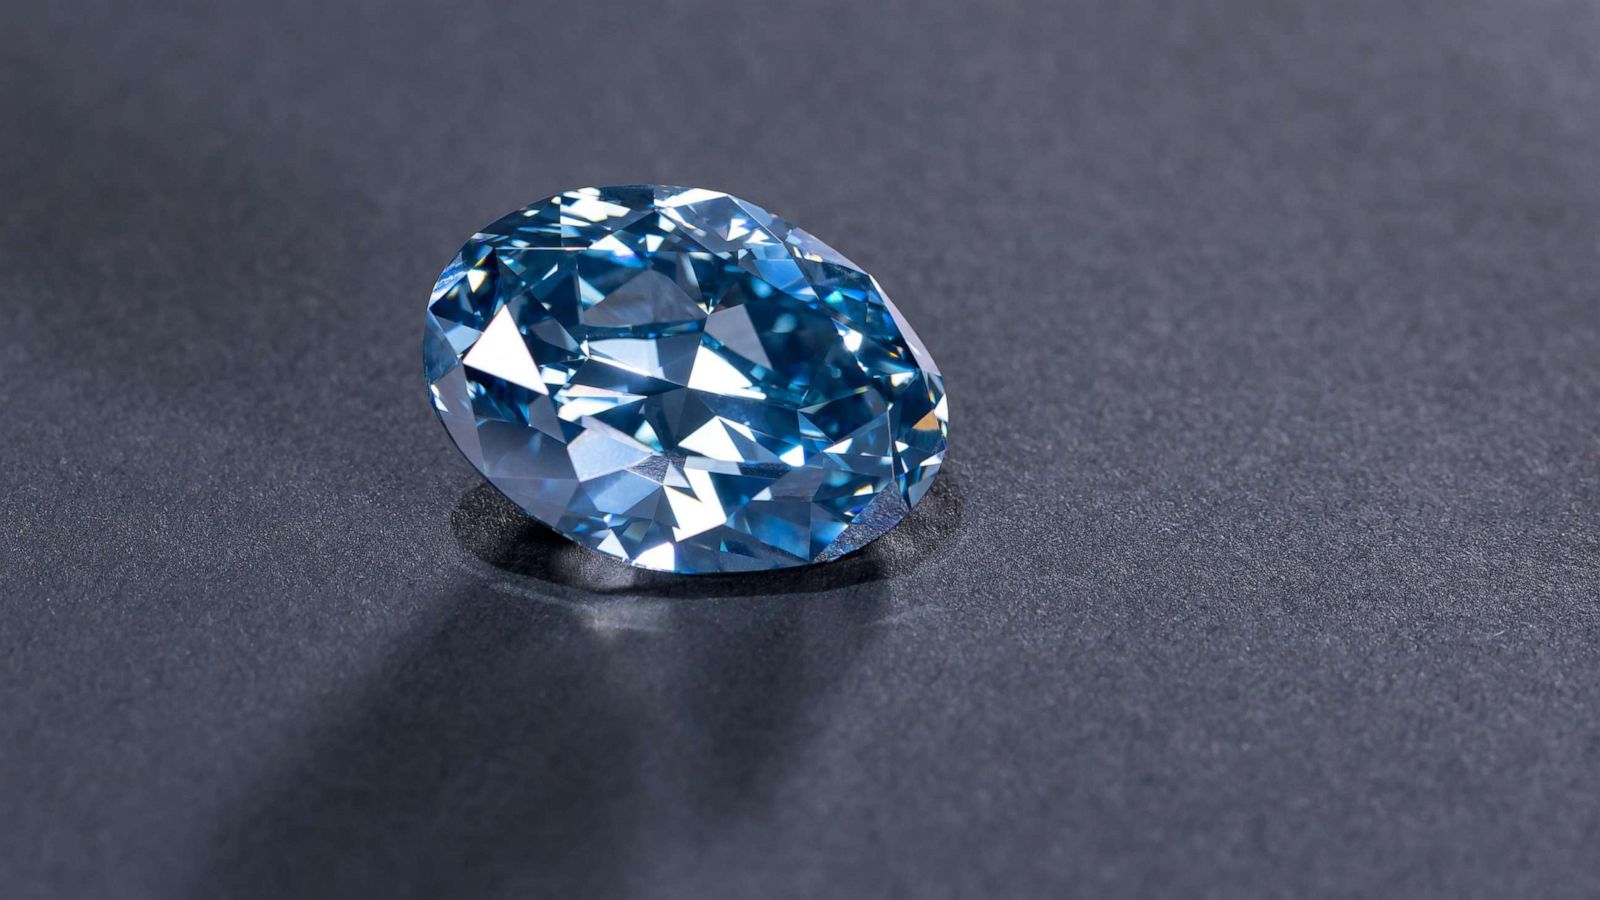 Rare 20-carat blue diamond unveiled in Botswana - ABC News